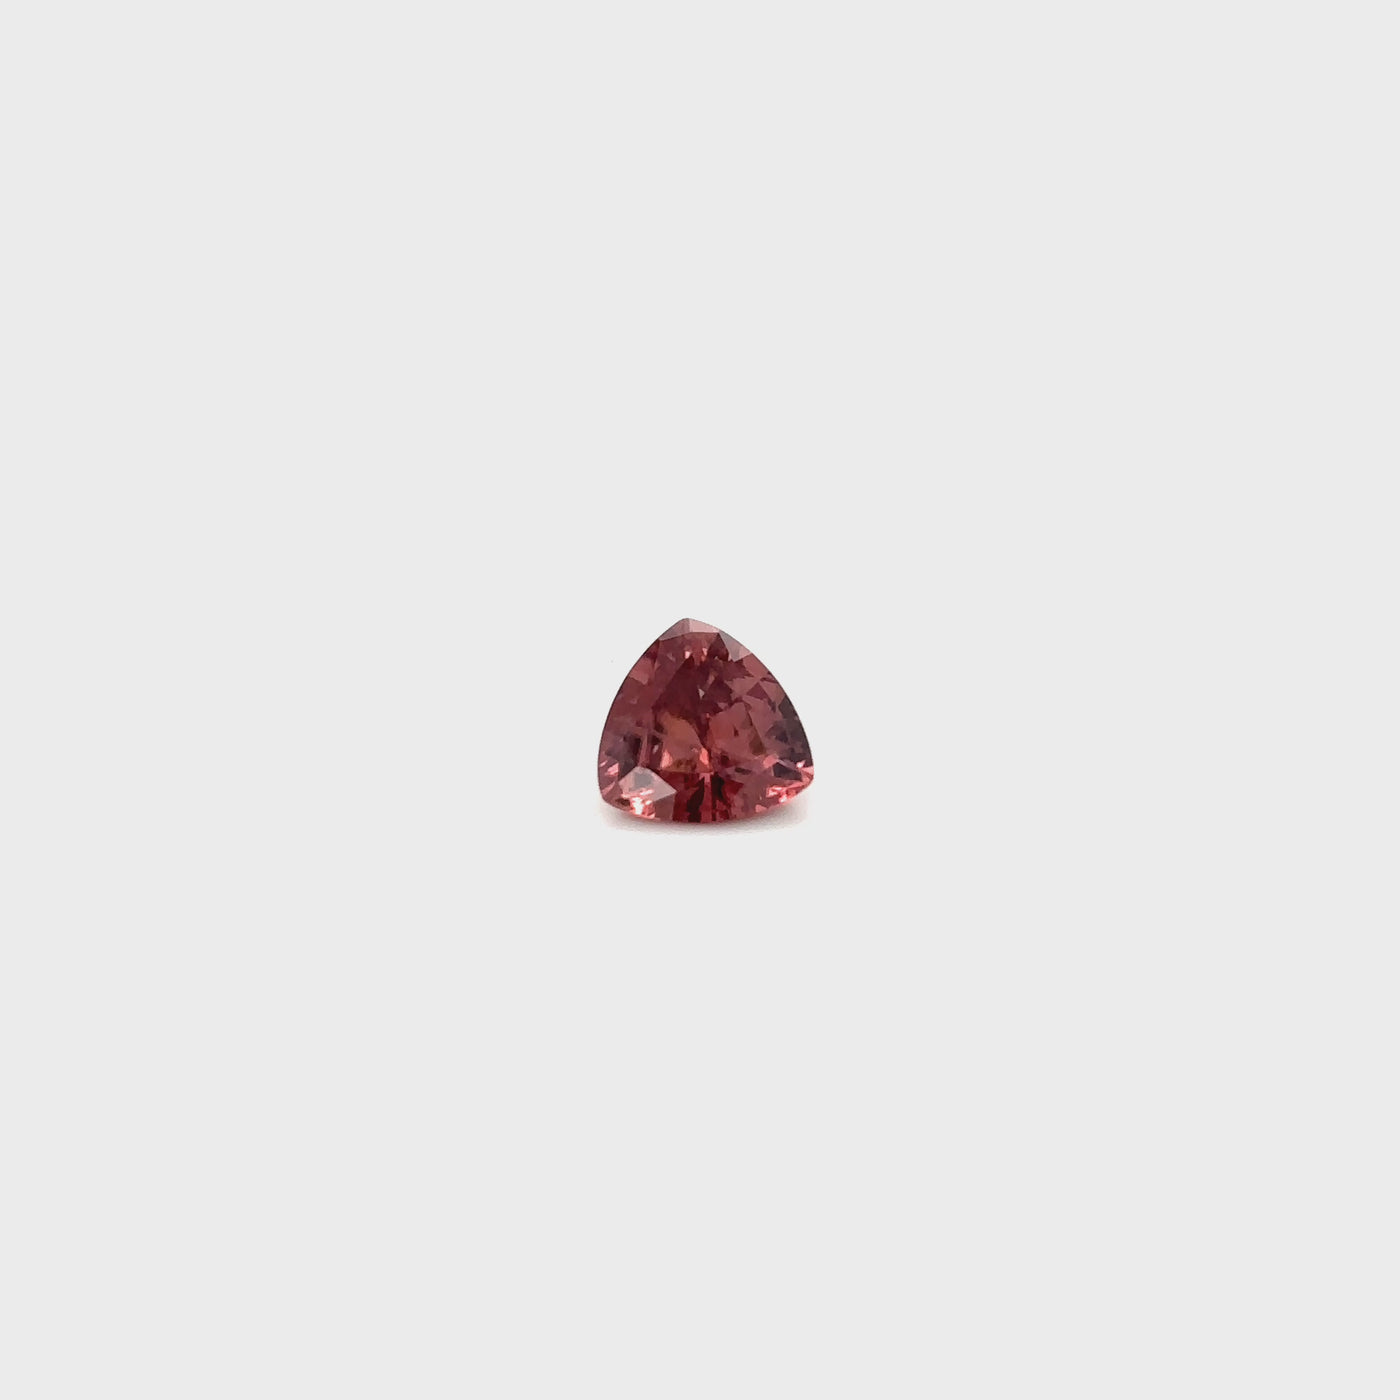 Zircon rose 4.42 carats trillion